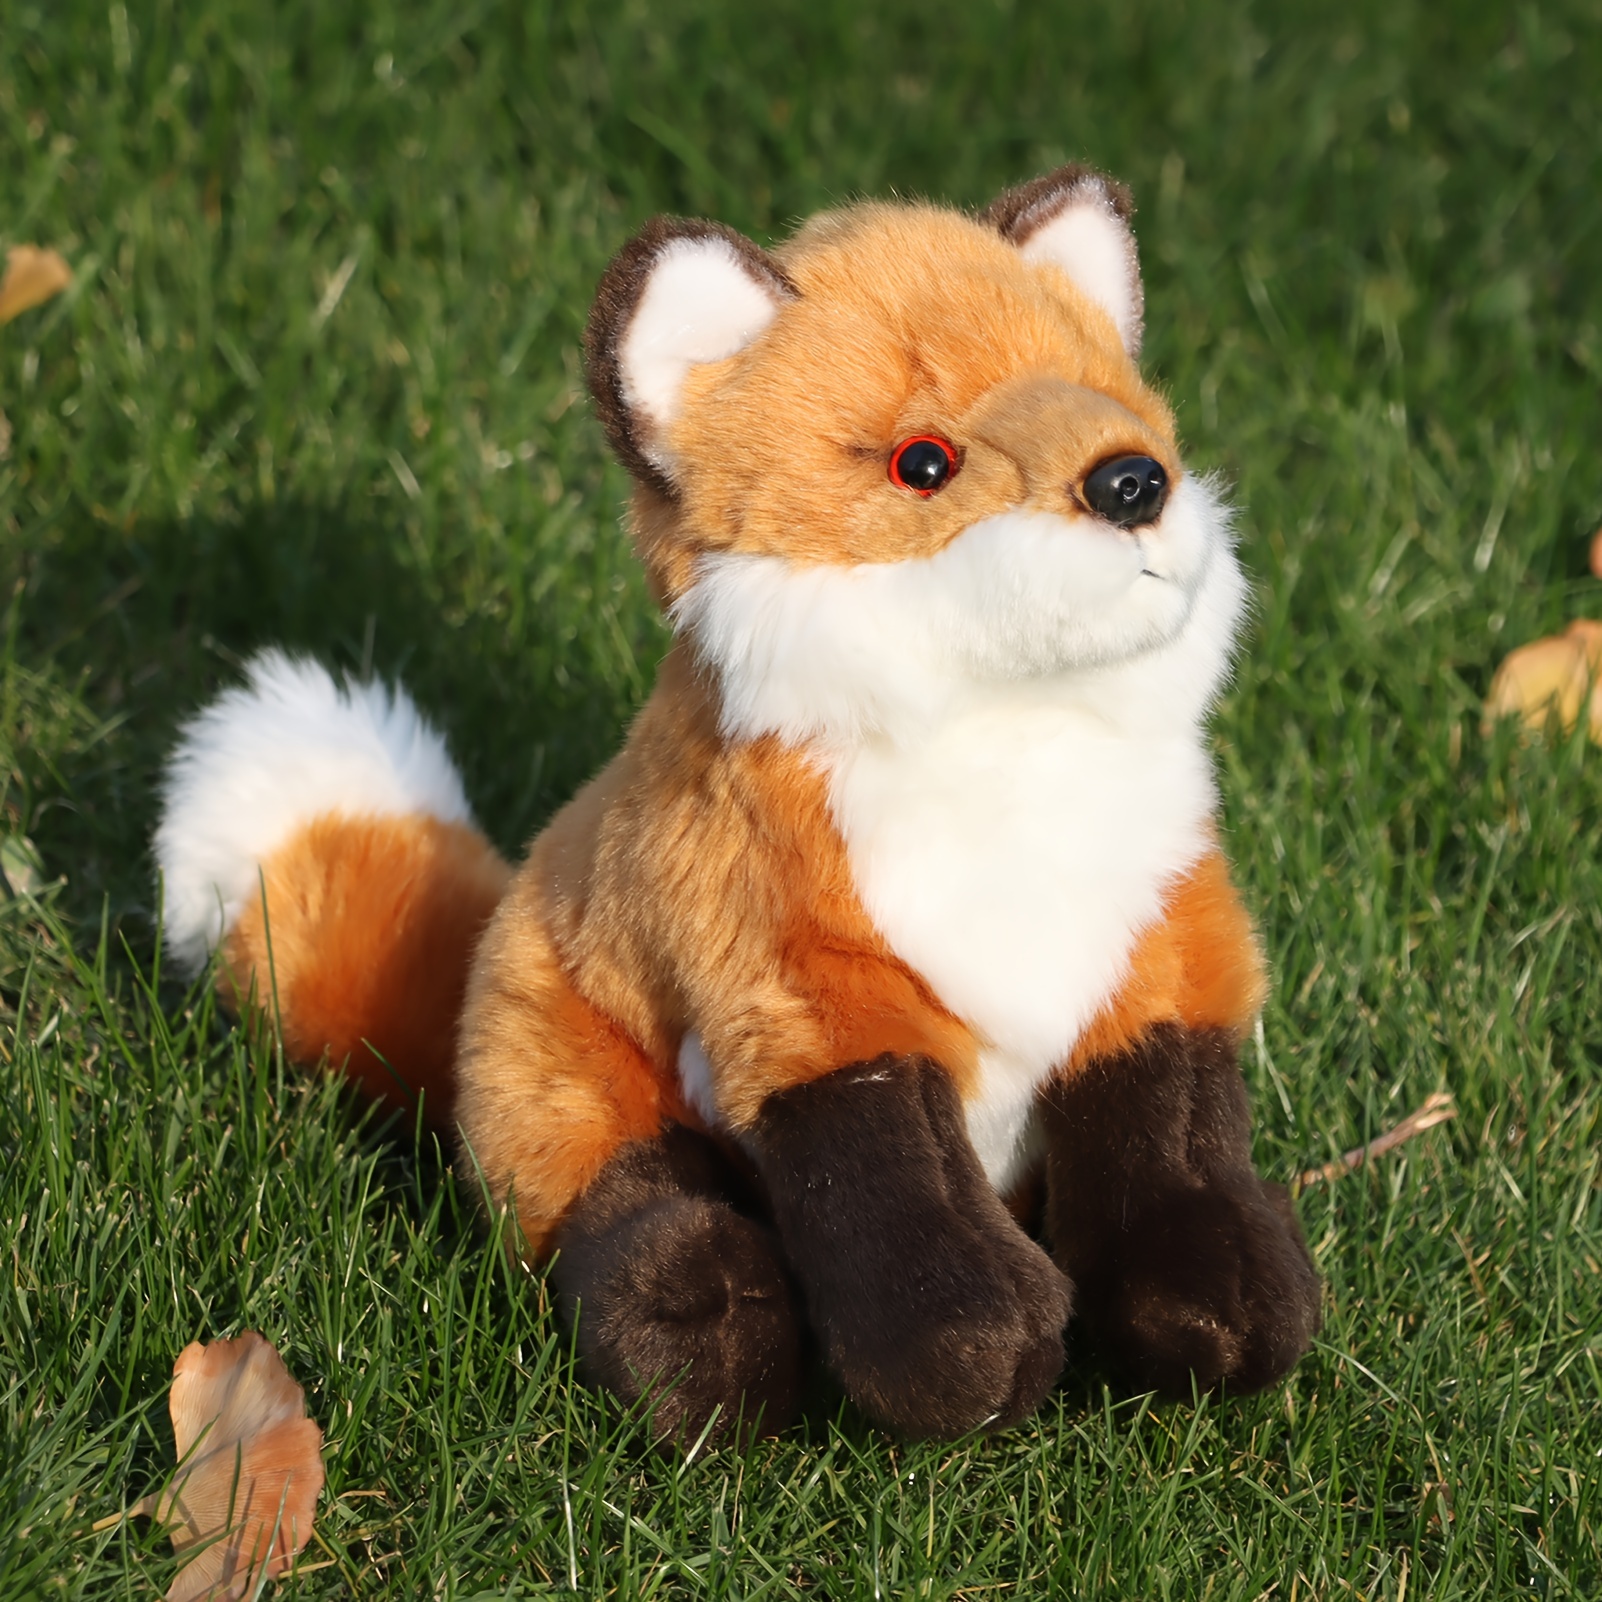 Red Fox Plush Toy